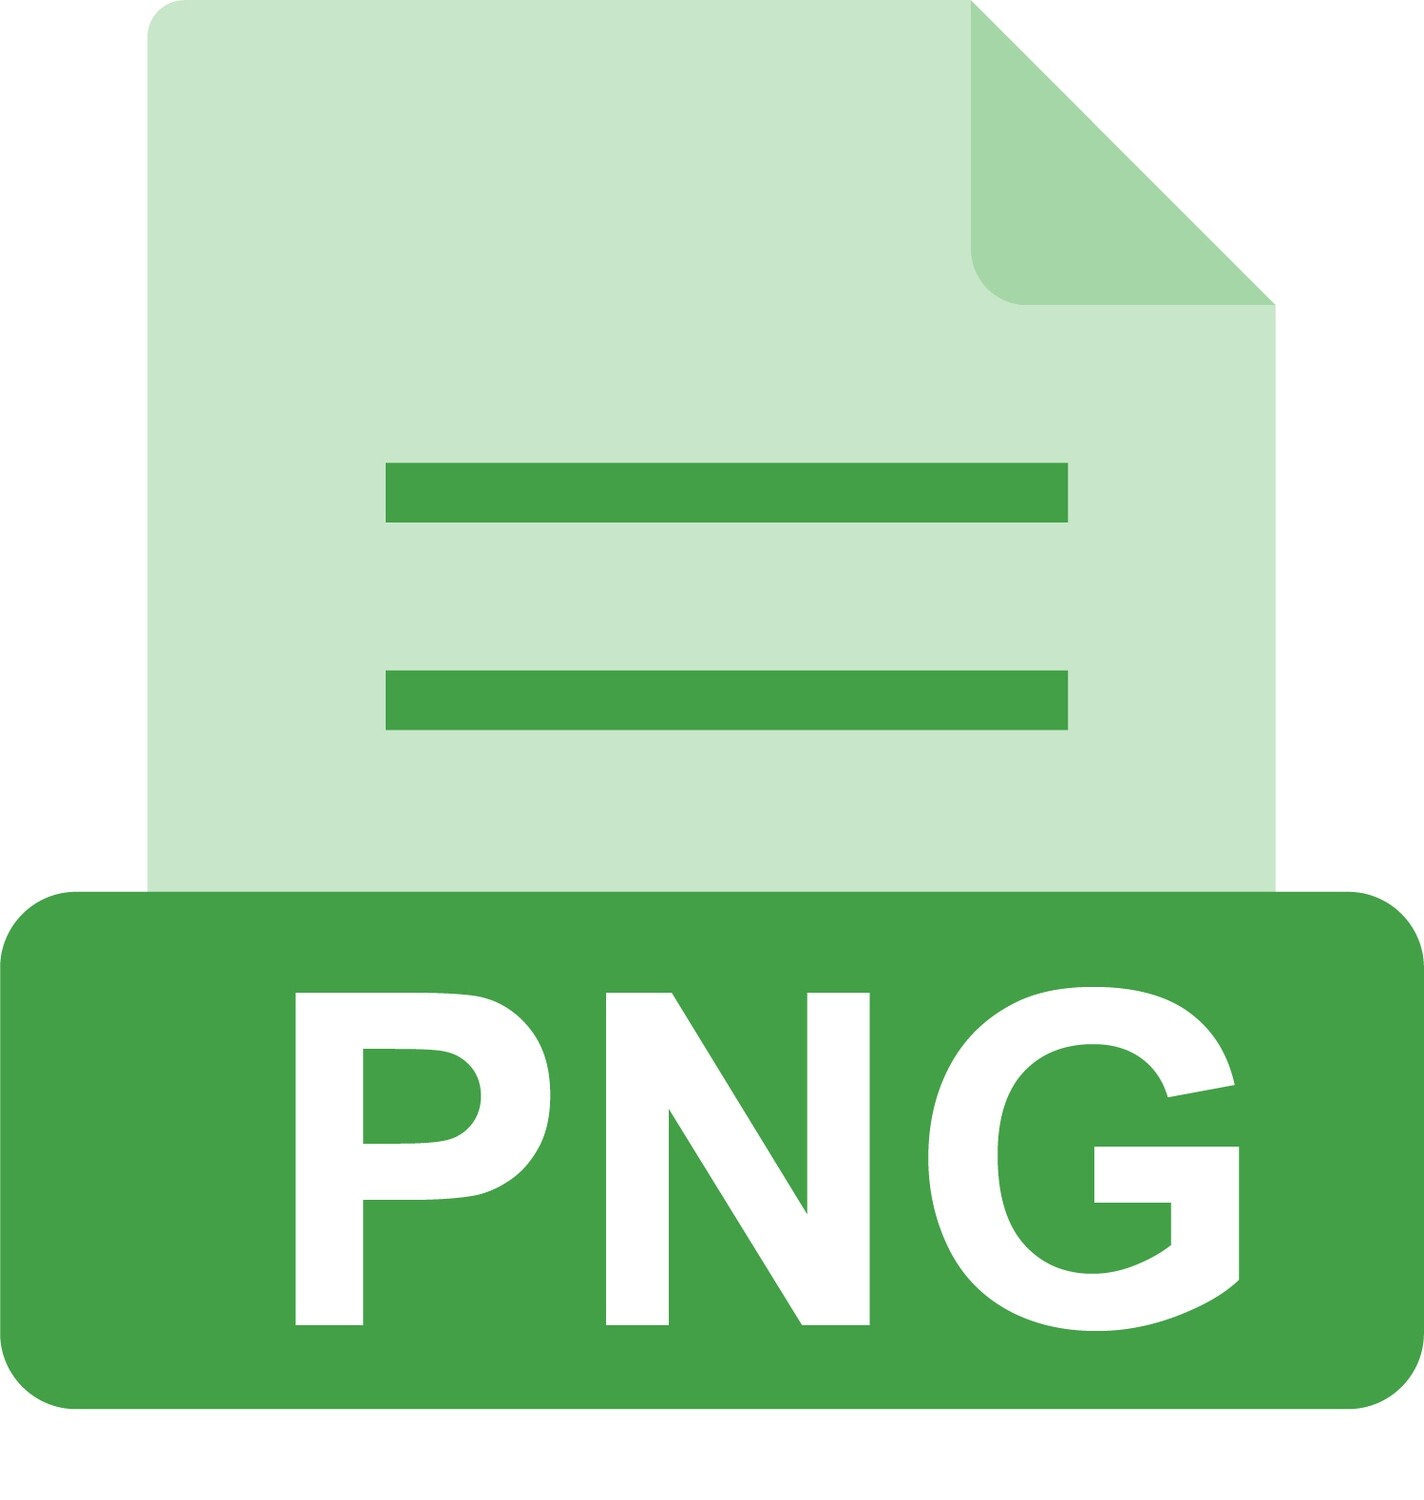 E-File: PNG, PE Mississippi